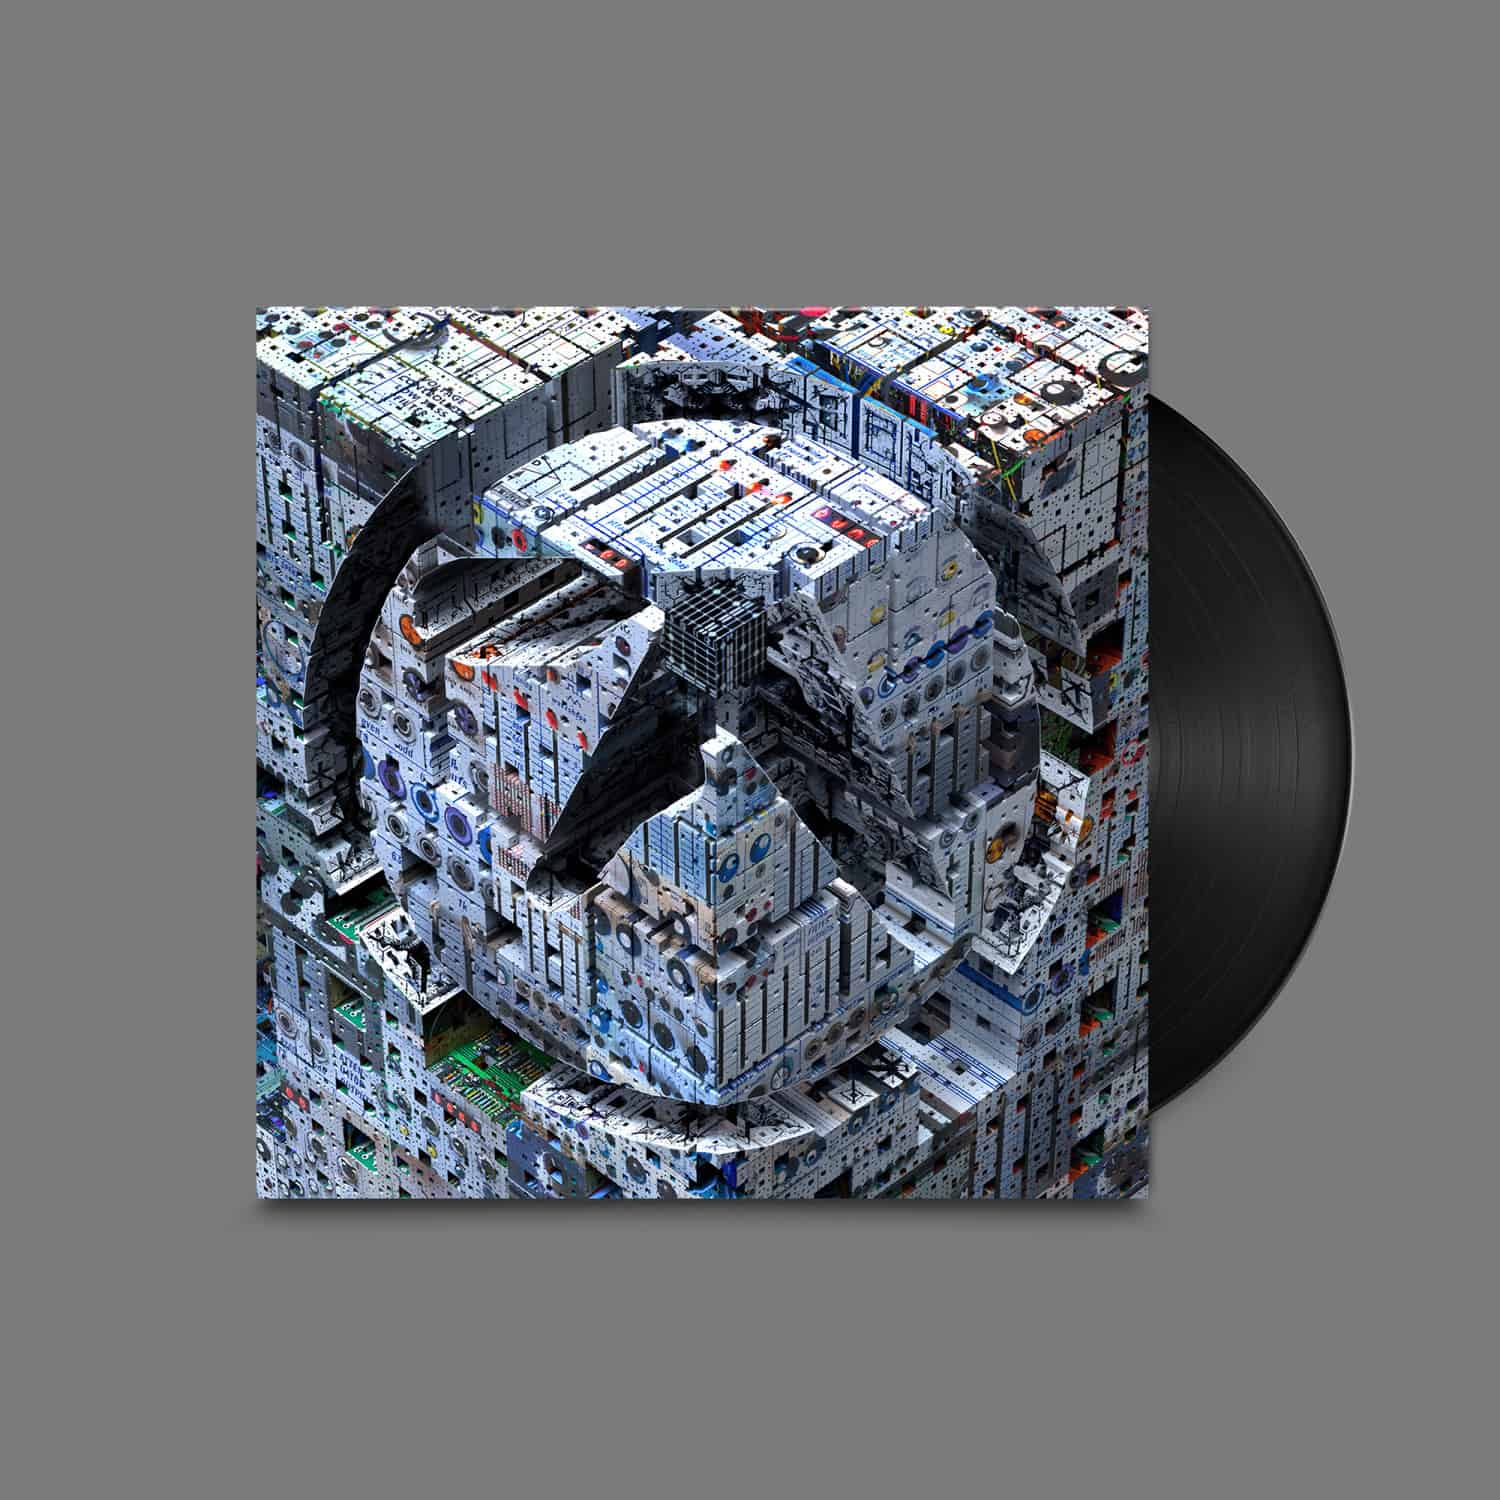 Aphex Twin - BLACKBOX LIFE RECORDER 21F / IN A ROOM7 F760 